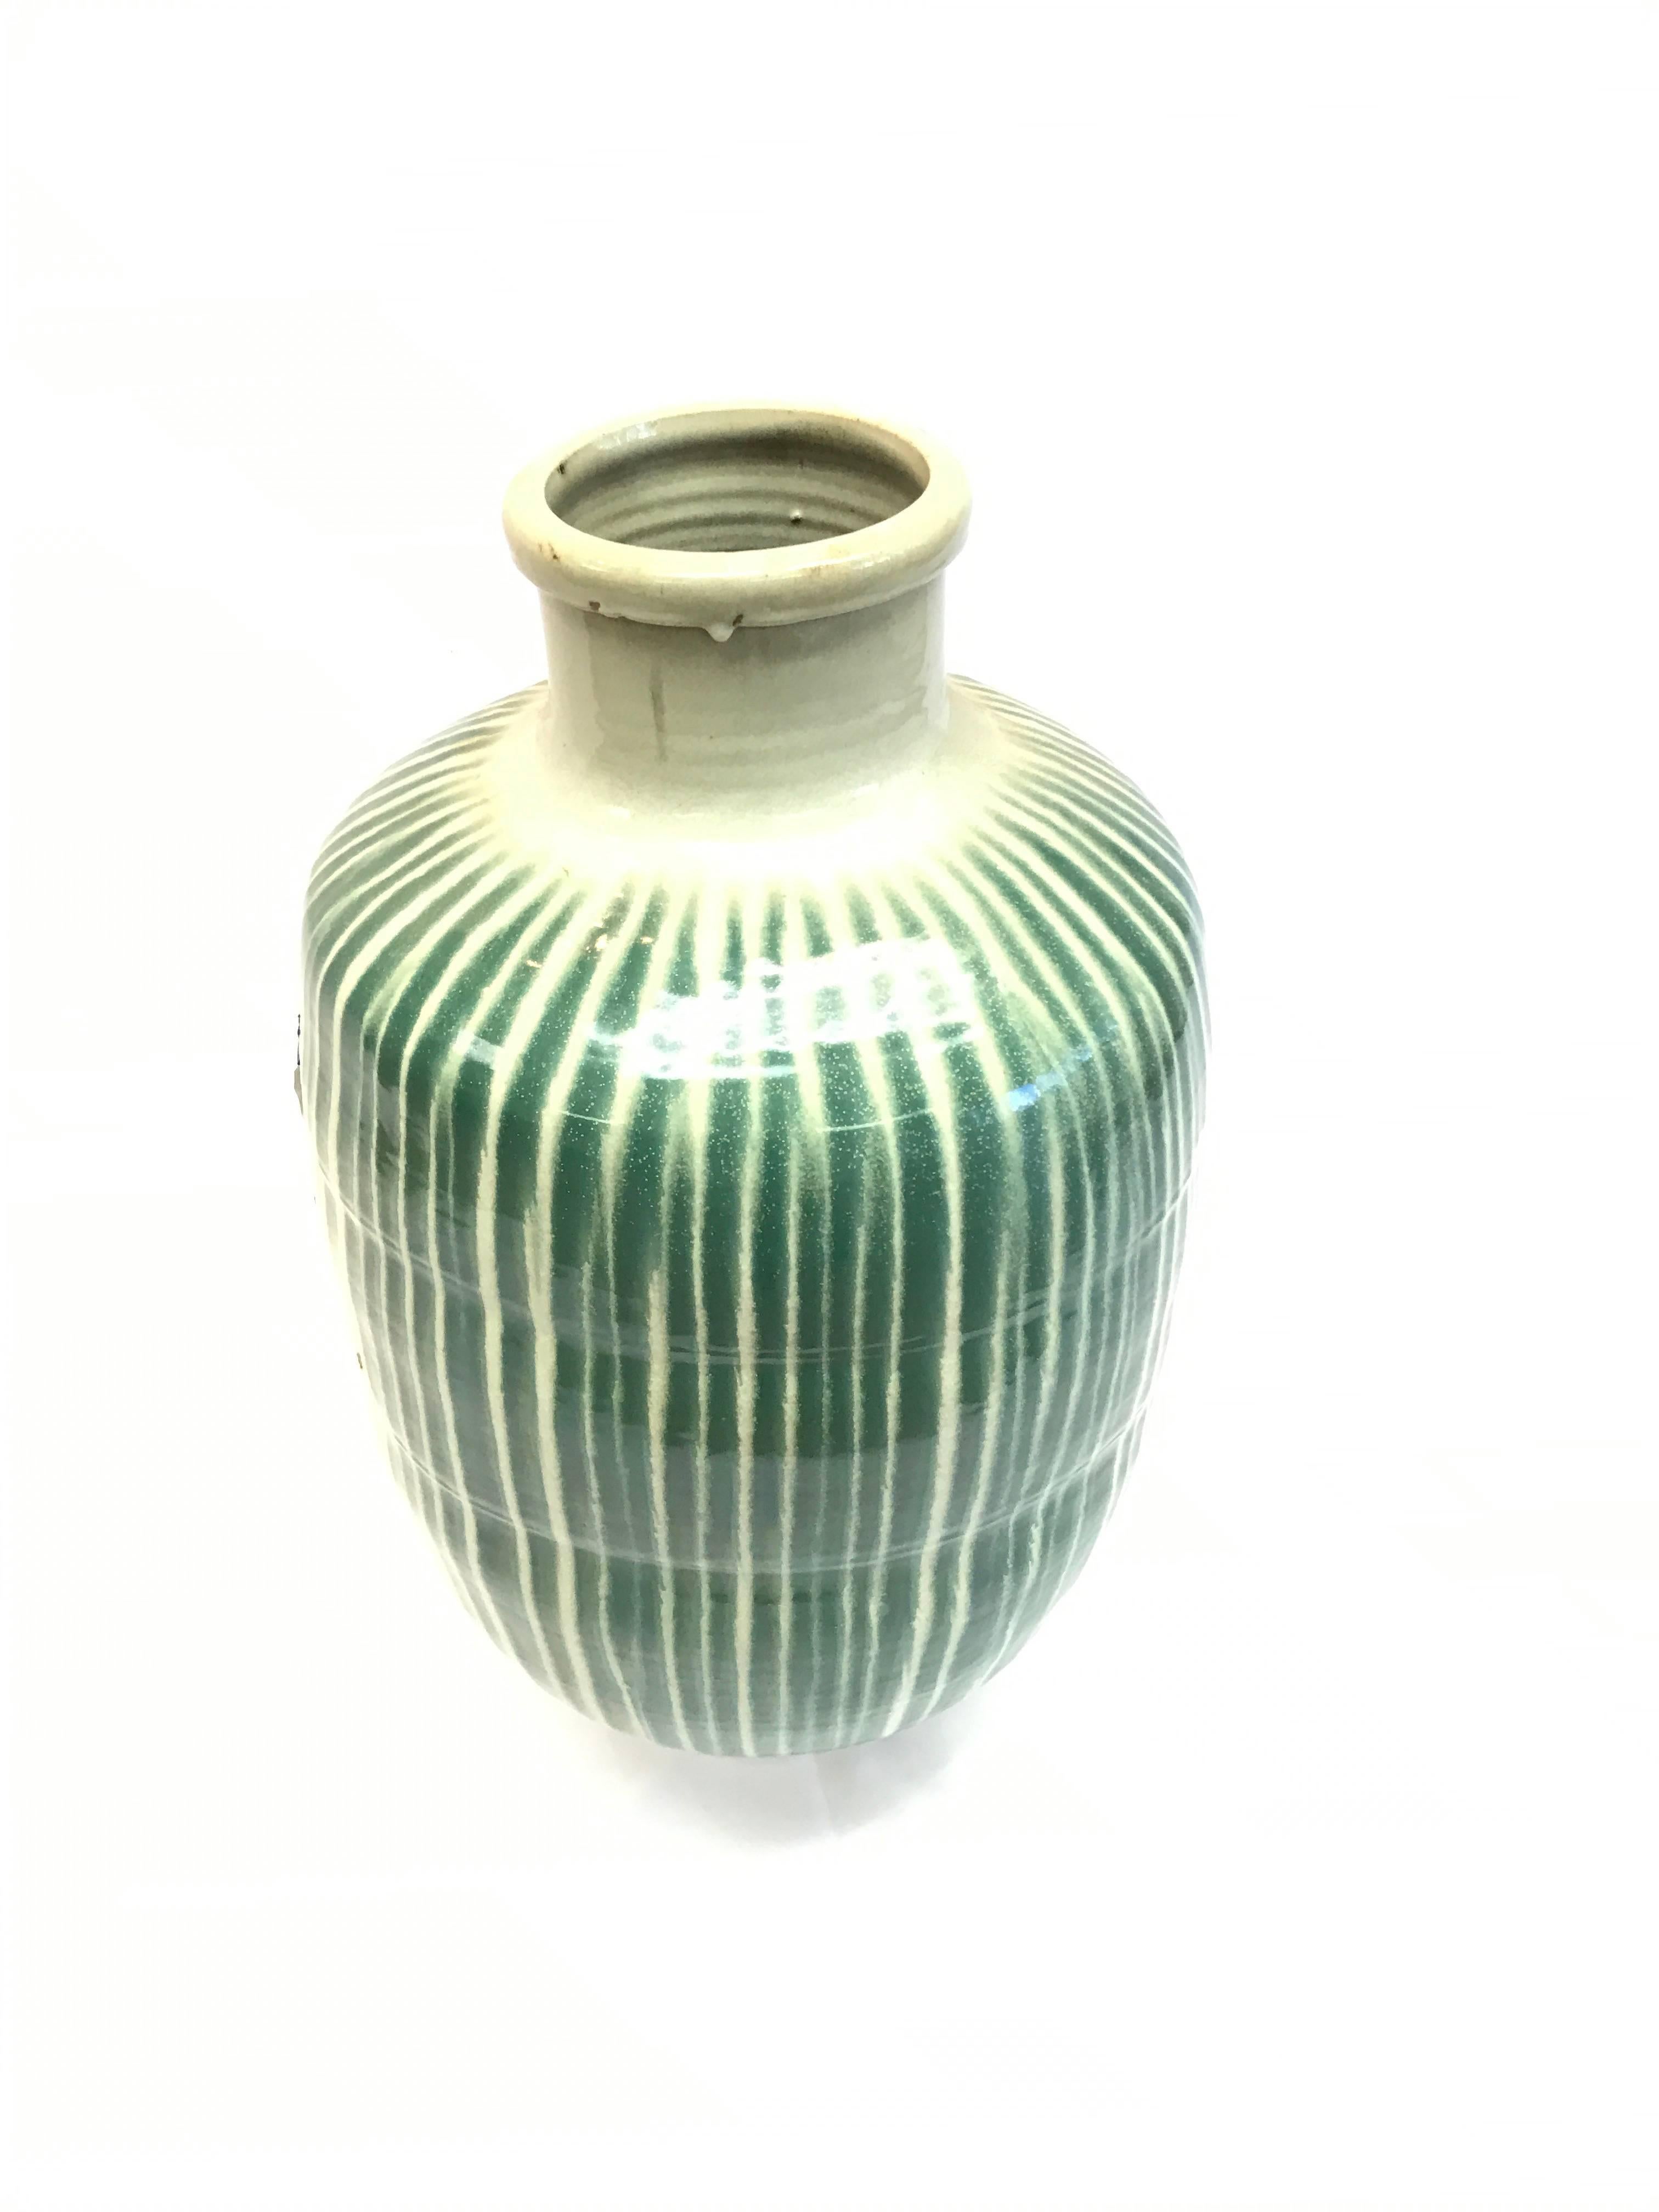 Japanese Shigaraki Storage Jar In Good Condition For Sale In Phoenix, AZ